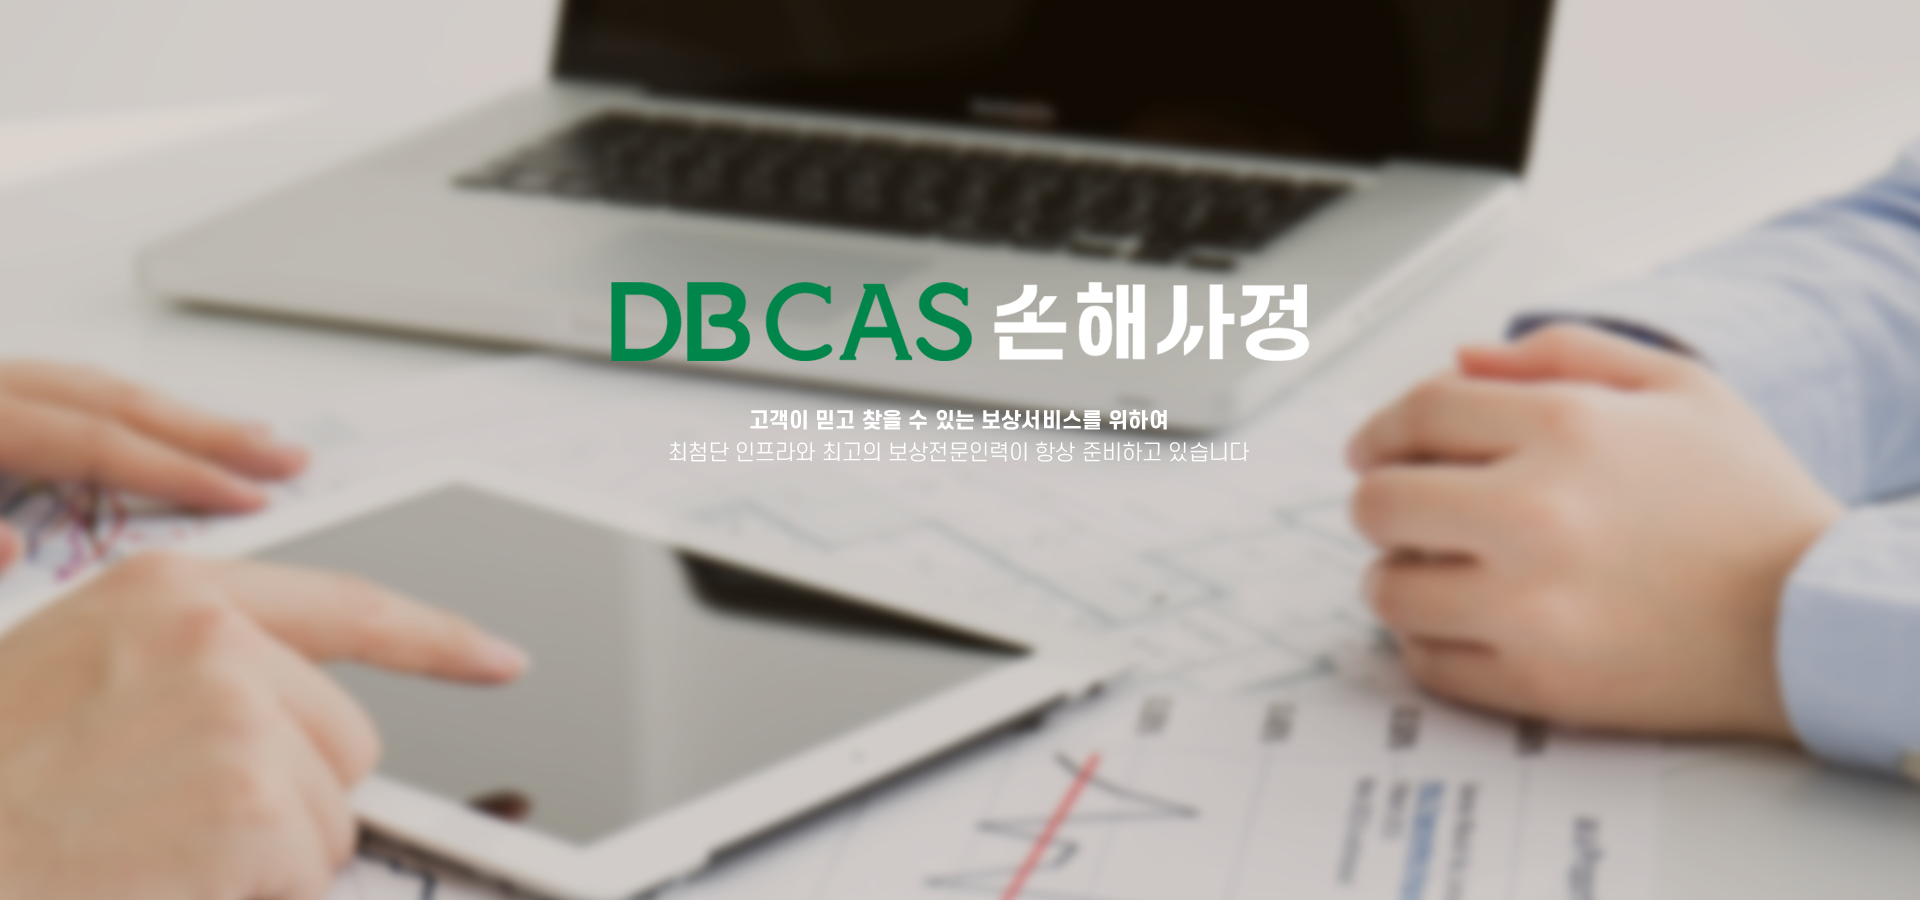 DBCAS손해사정 : 고객이 믿고 찾을 수 있는 보상서비스를 위하여 최첨단 인프라와 최고의 보상전문인력이 항상 준비하고 있습니다.